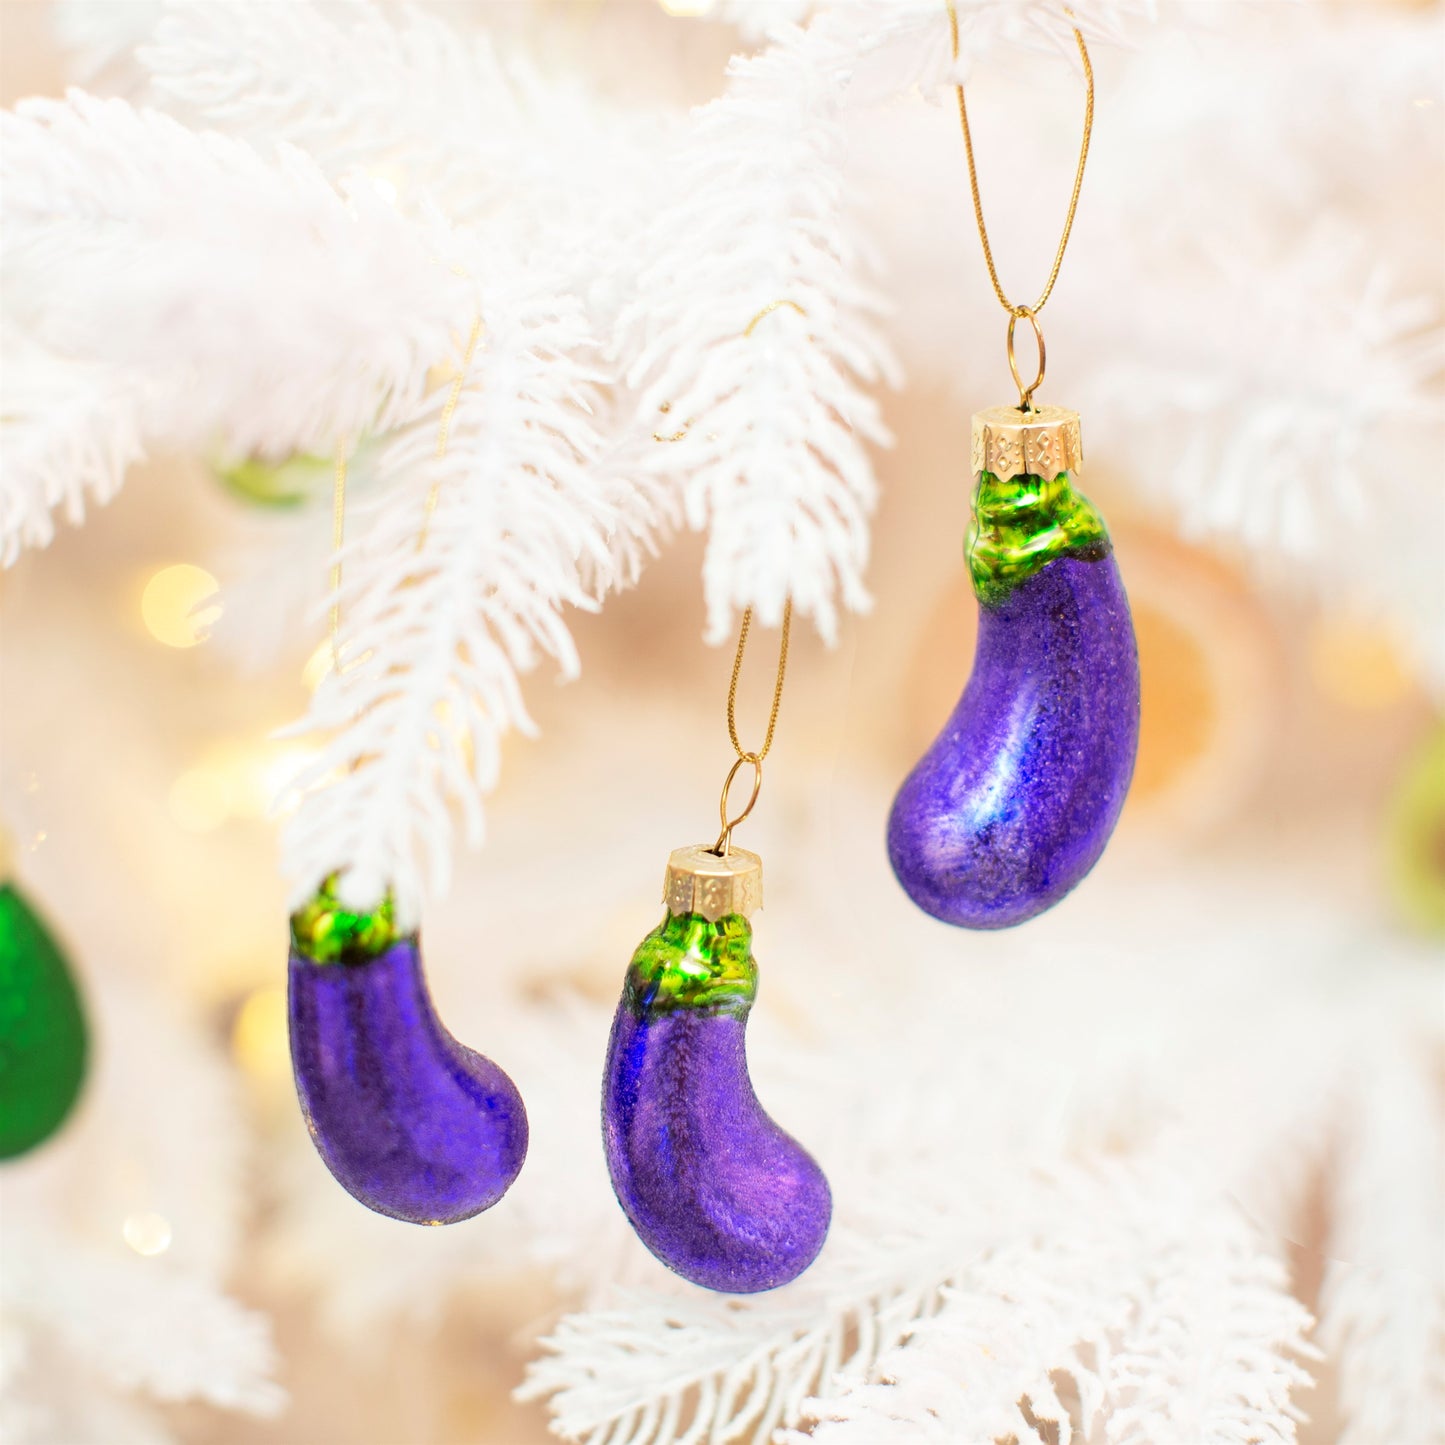 Aubergine/Eggplant Glass Christmas Tree Decorations (Set of 3)